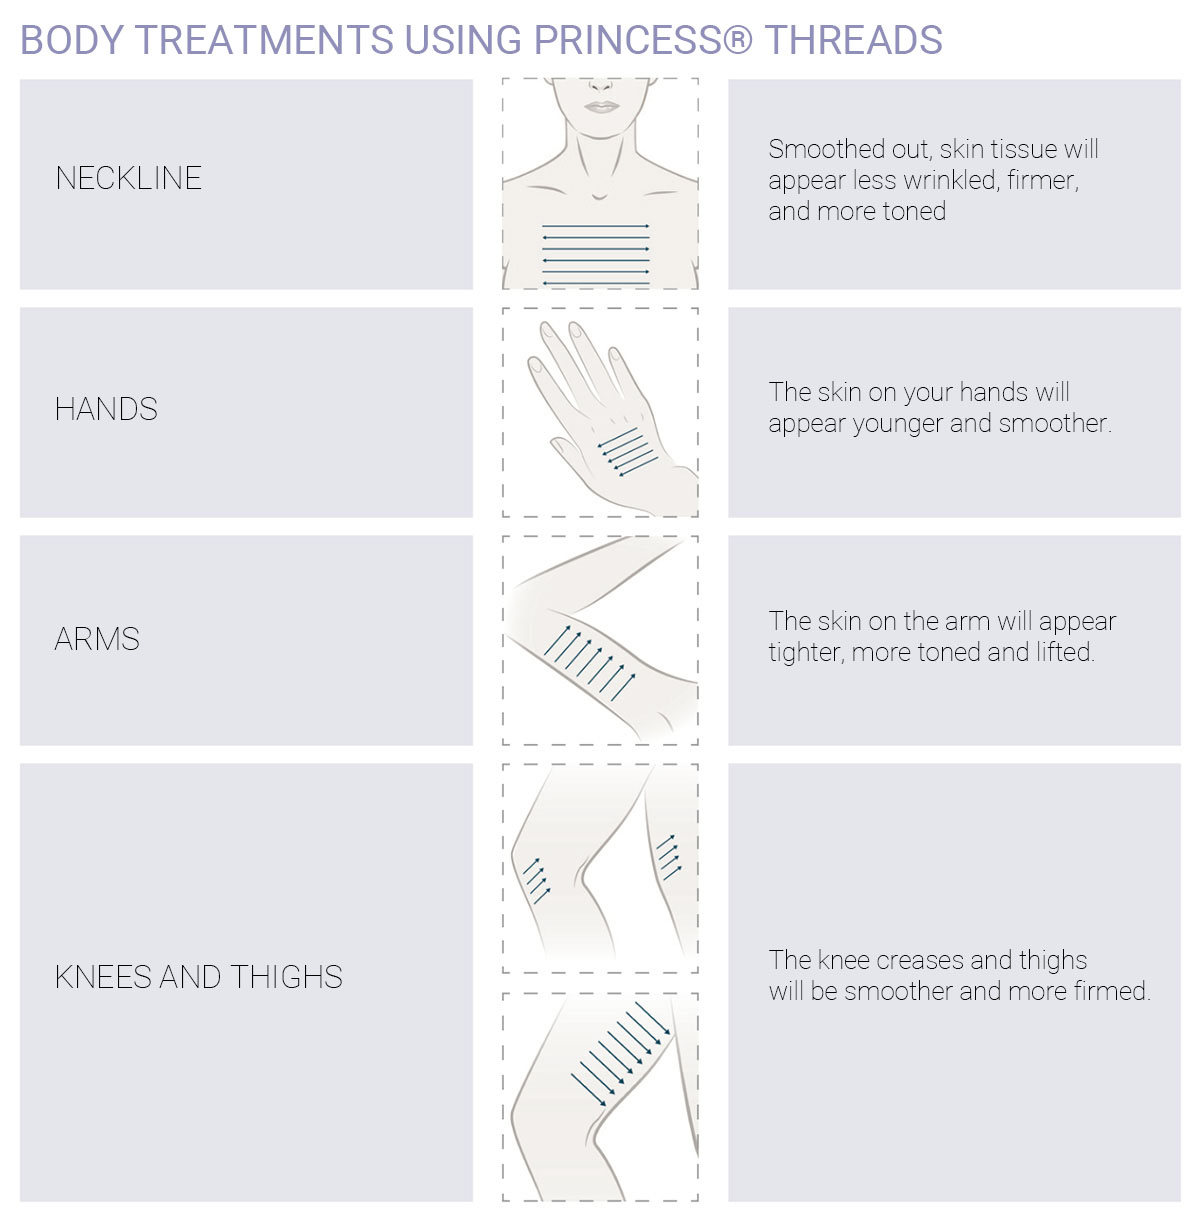 Body treatments using Princess threads